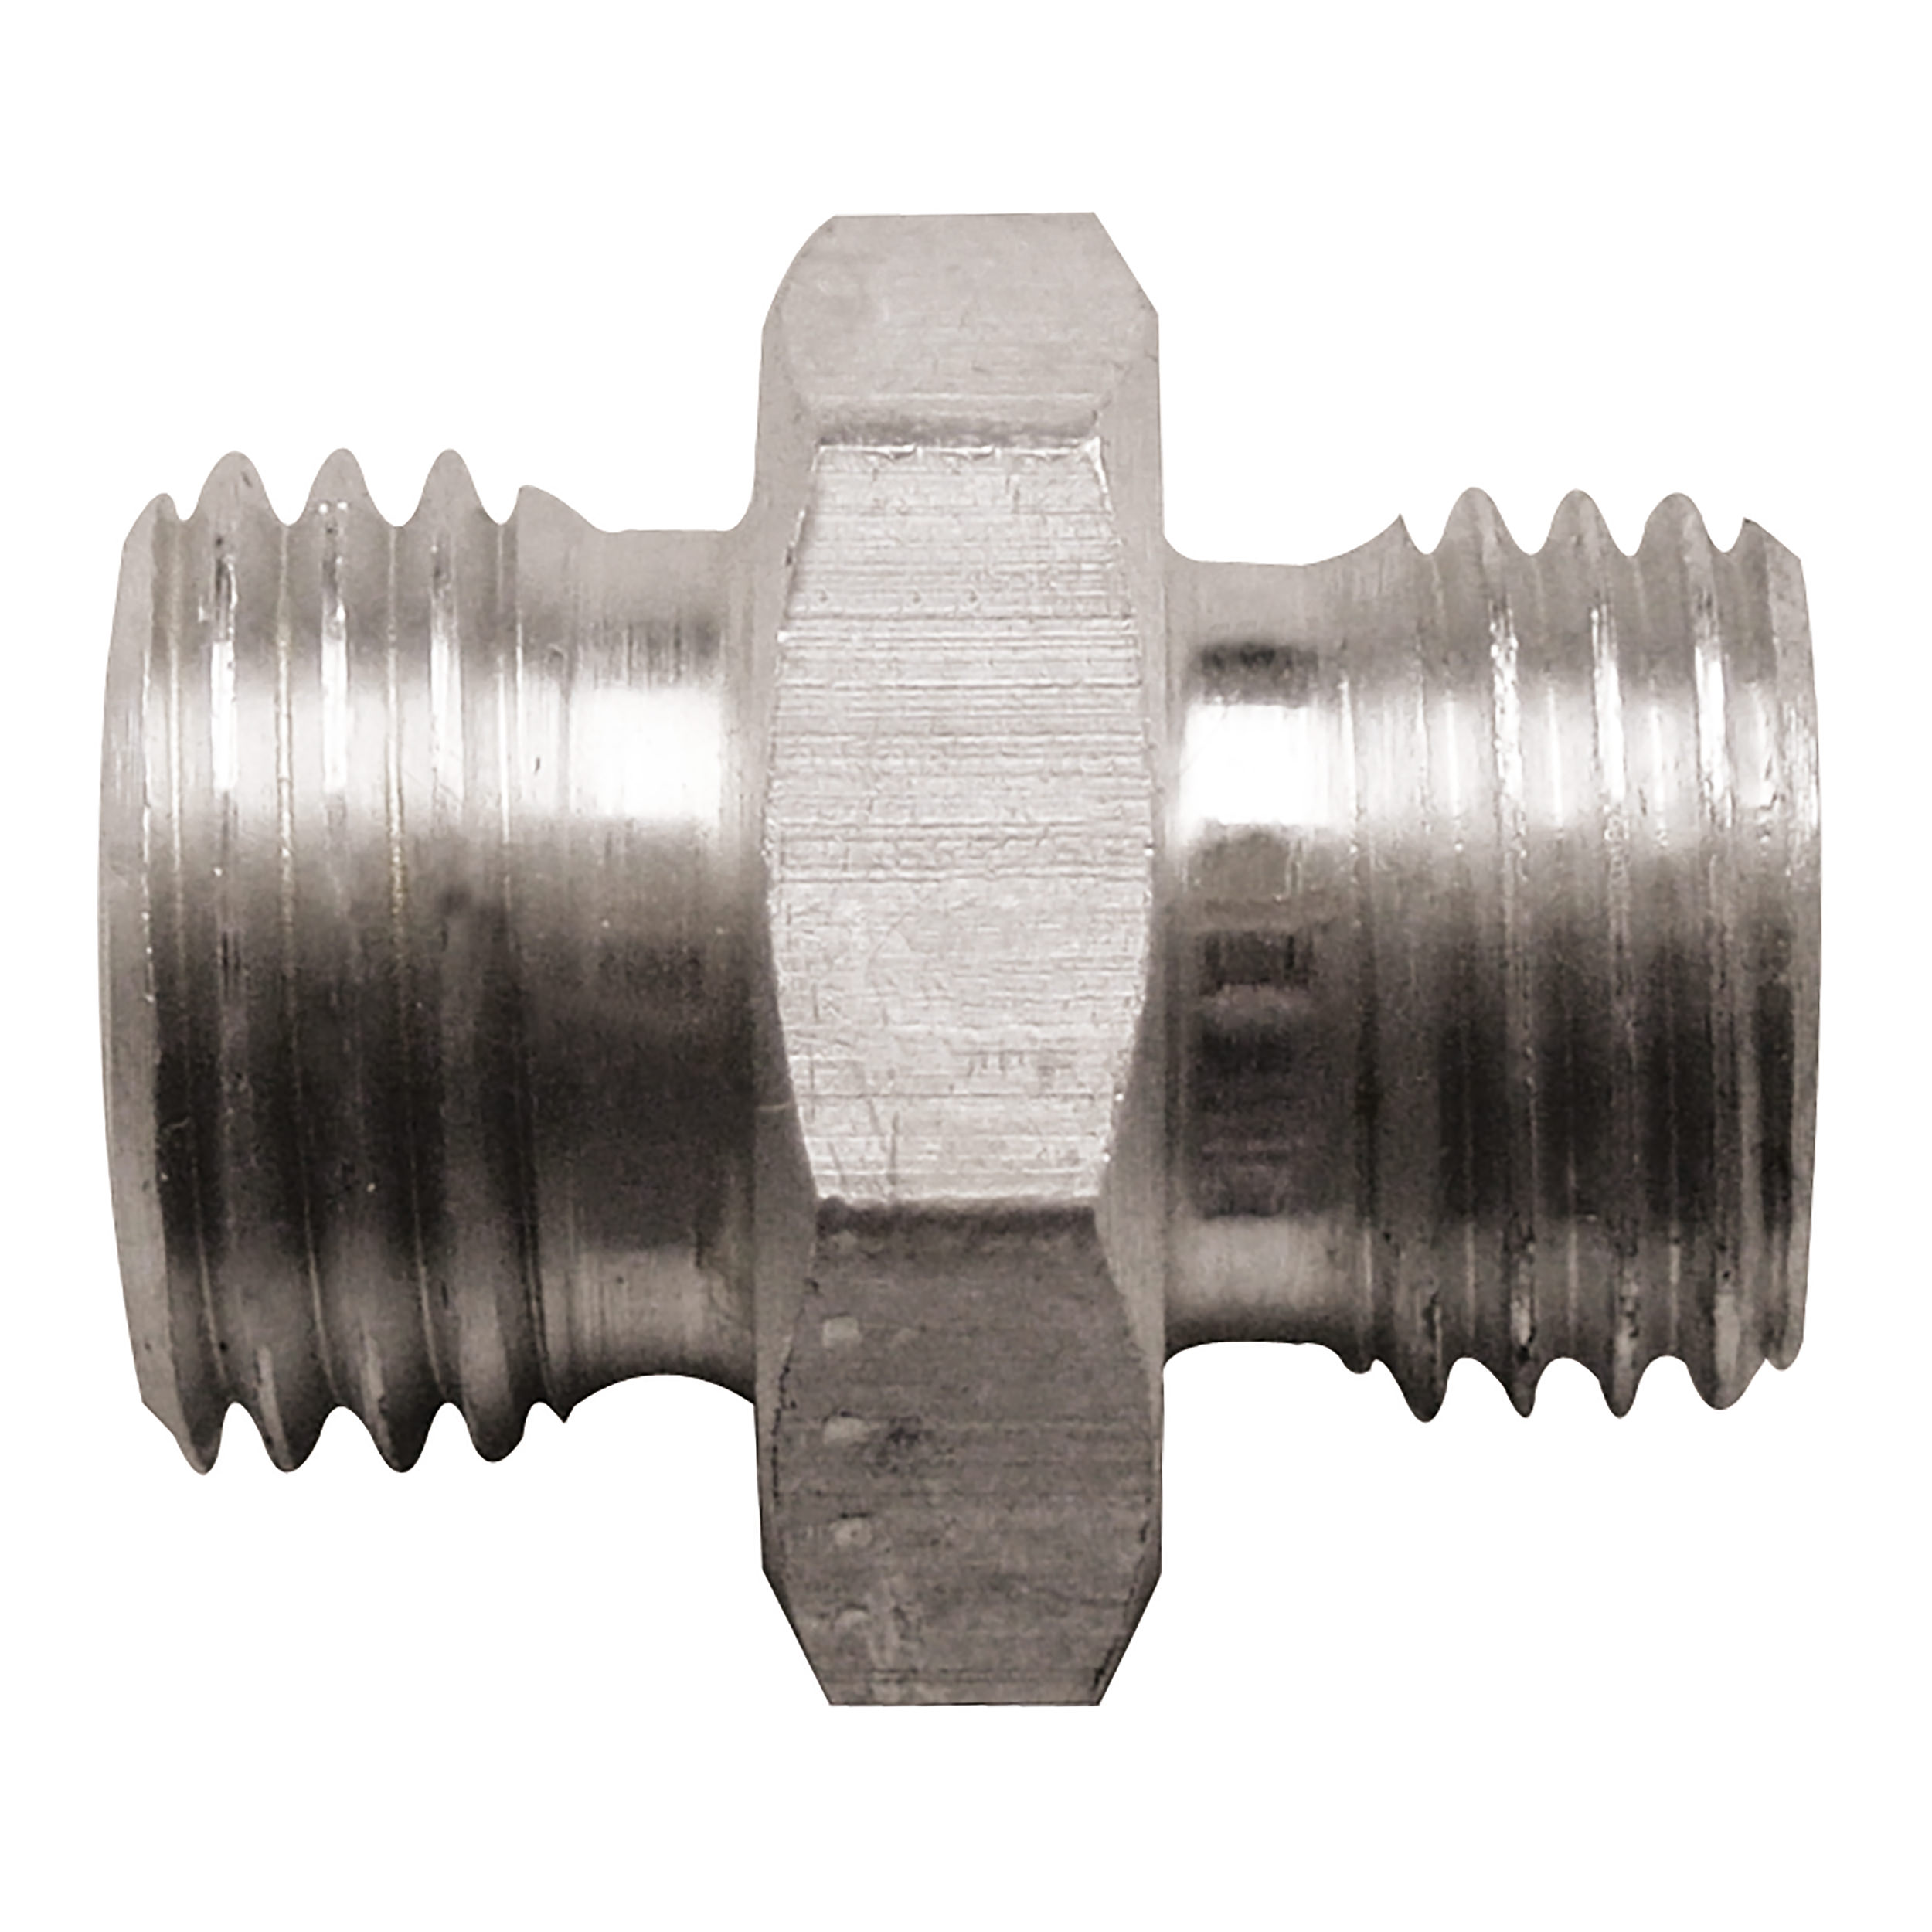 Double-nippel G¼ male × M12 × 1.25, aluminum